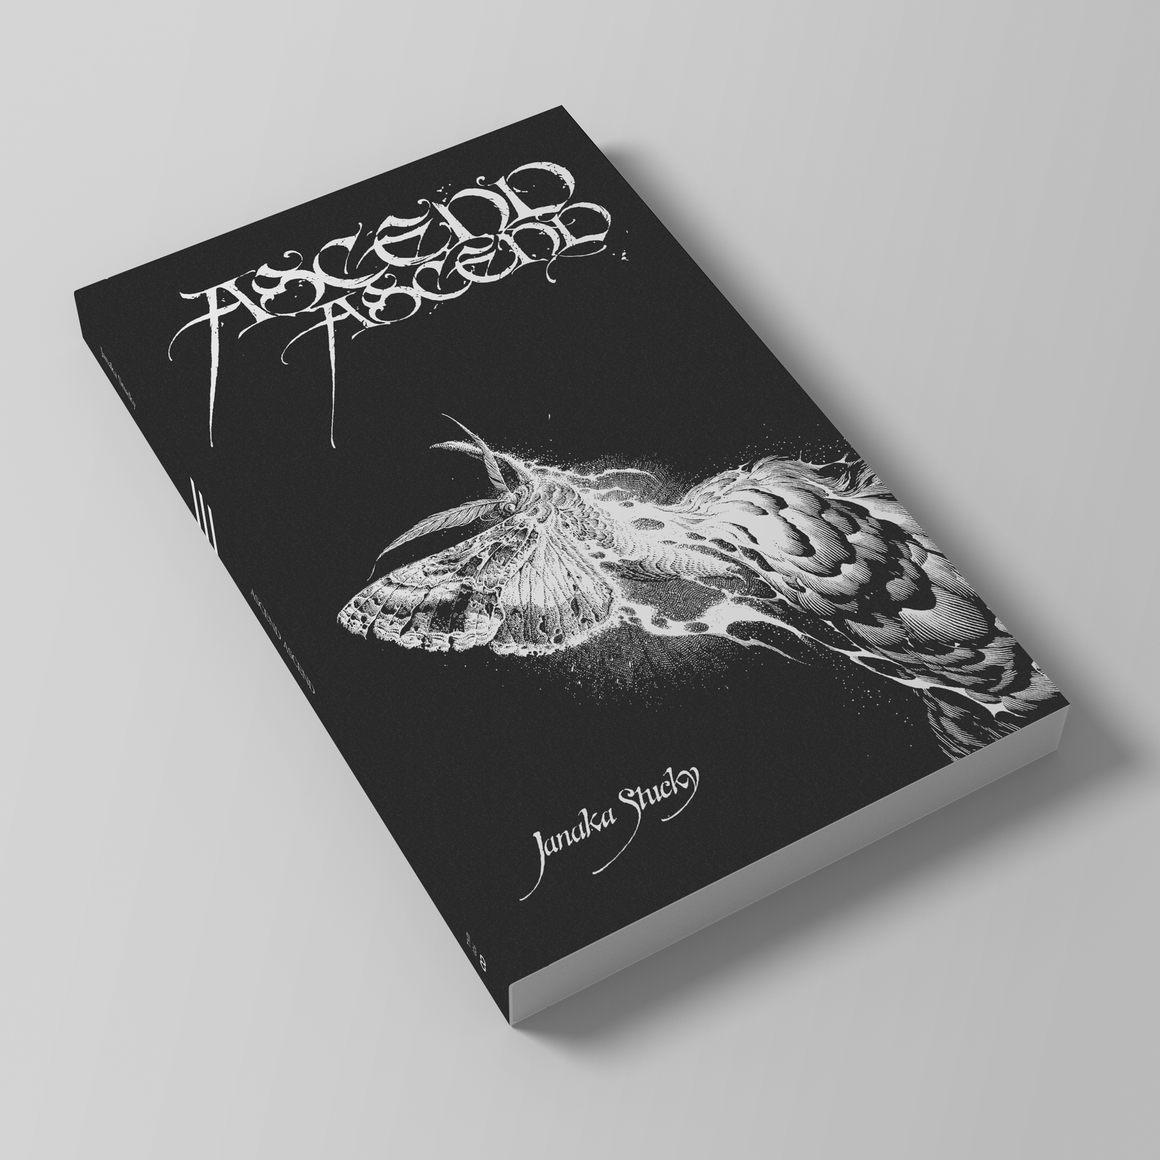 Trade edition of Ascend Ascend